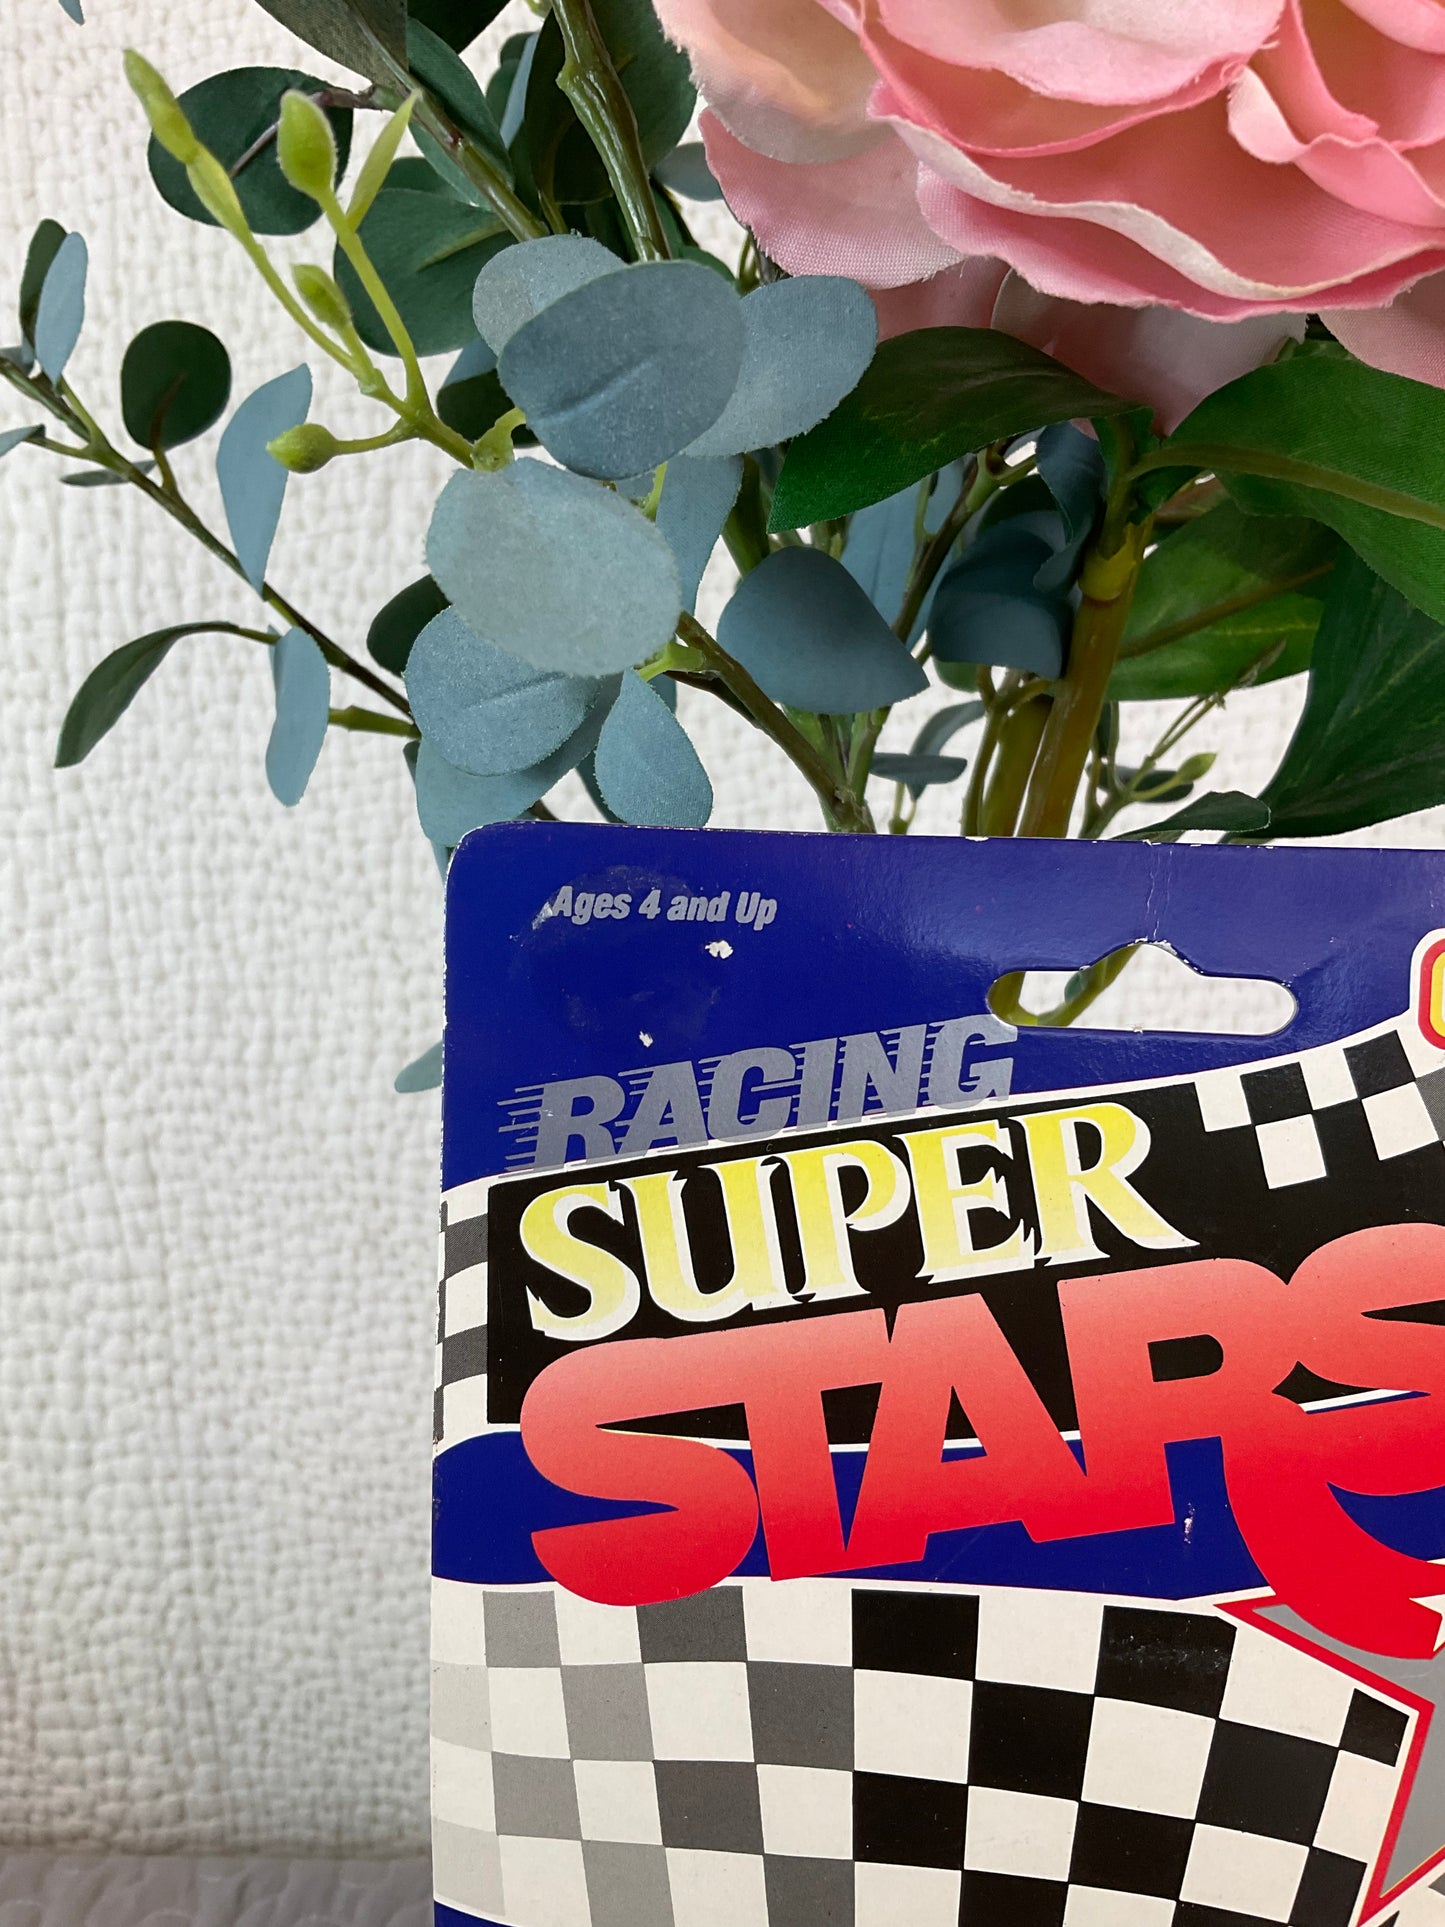 CLEARANCE Matchbox Racing Super Stars #7 Alan Kulwicki Hooters